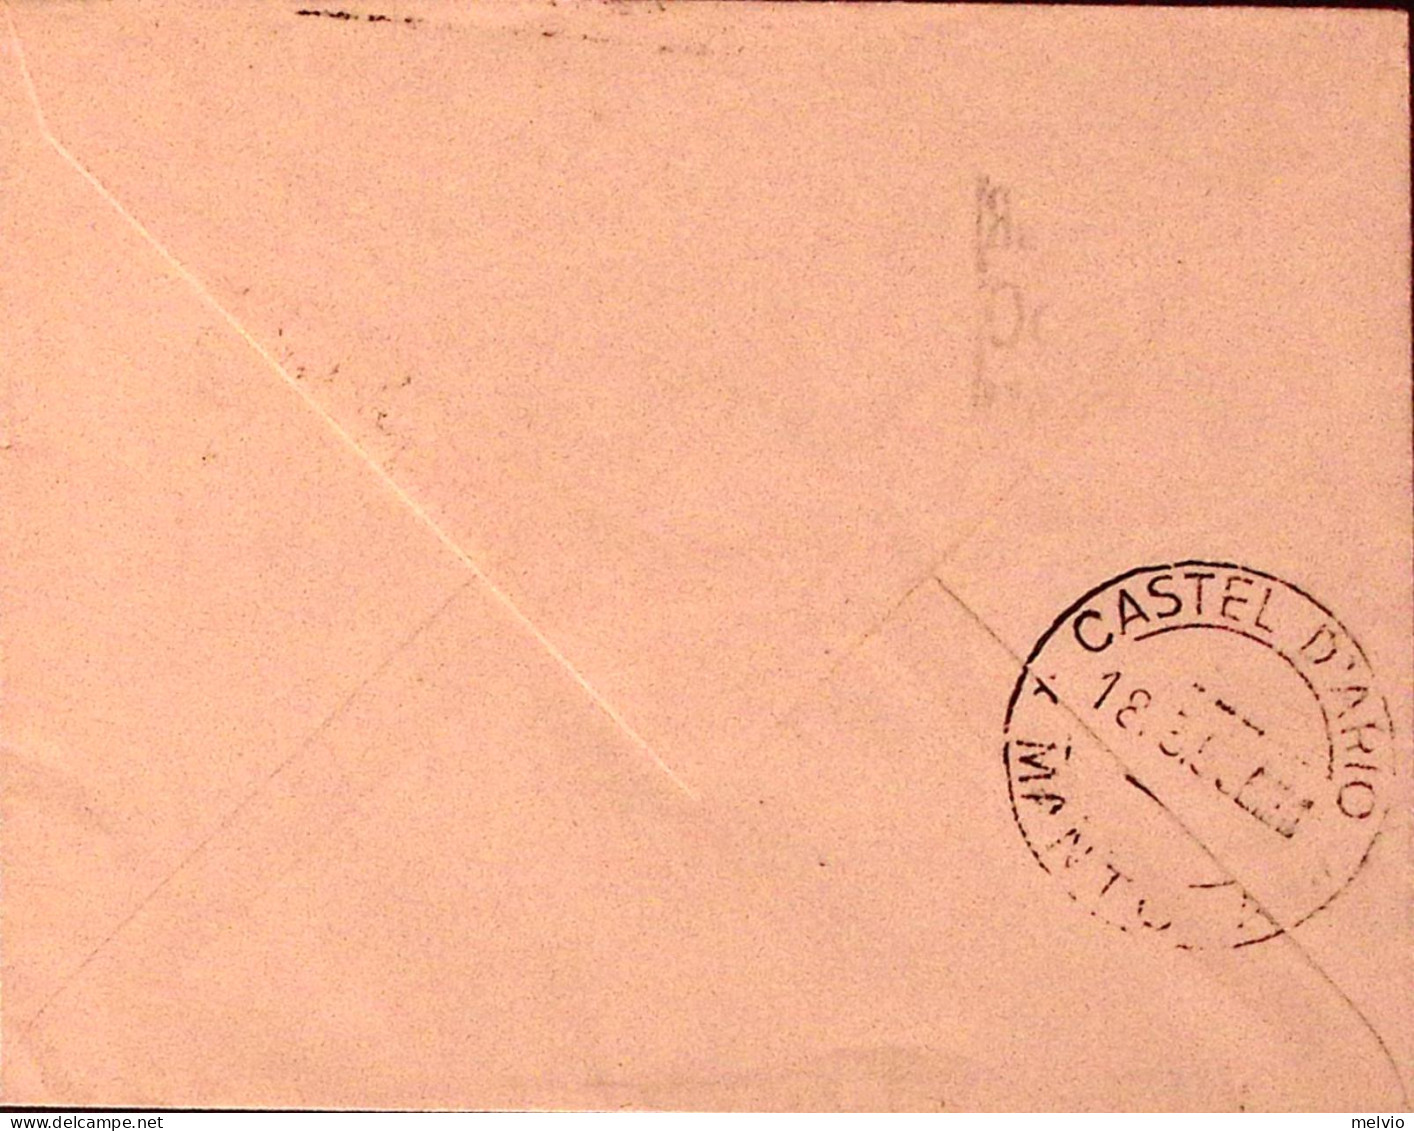 1950-GRAN BRETAGNA GREAT BRITAIN Fiera Industria/Birgmingham (16.5) Ann. Spec. - Lettres & Documents